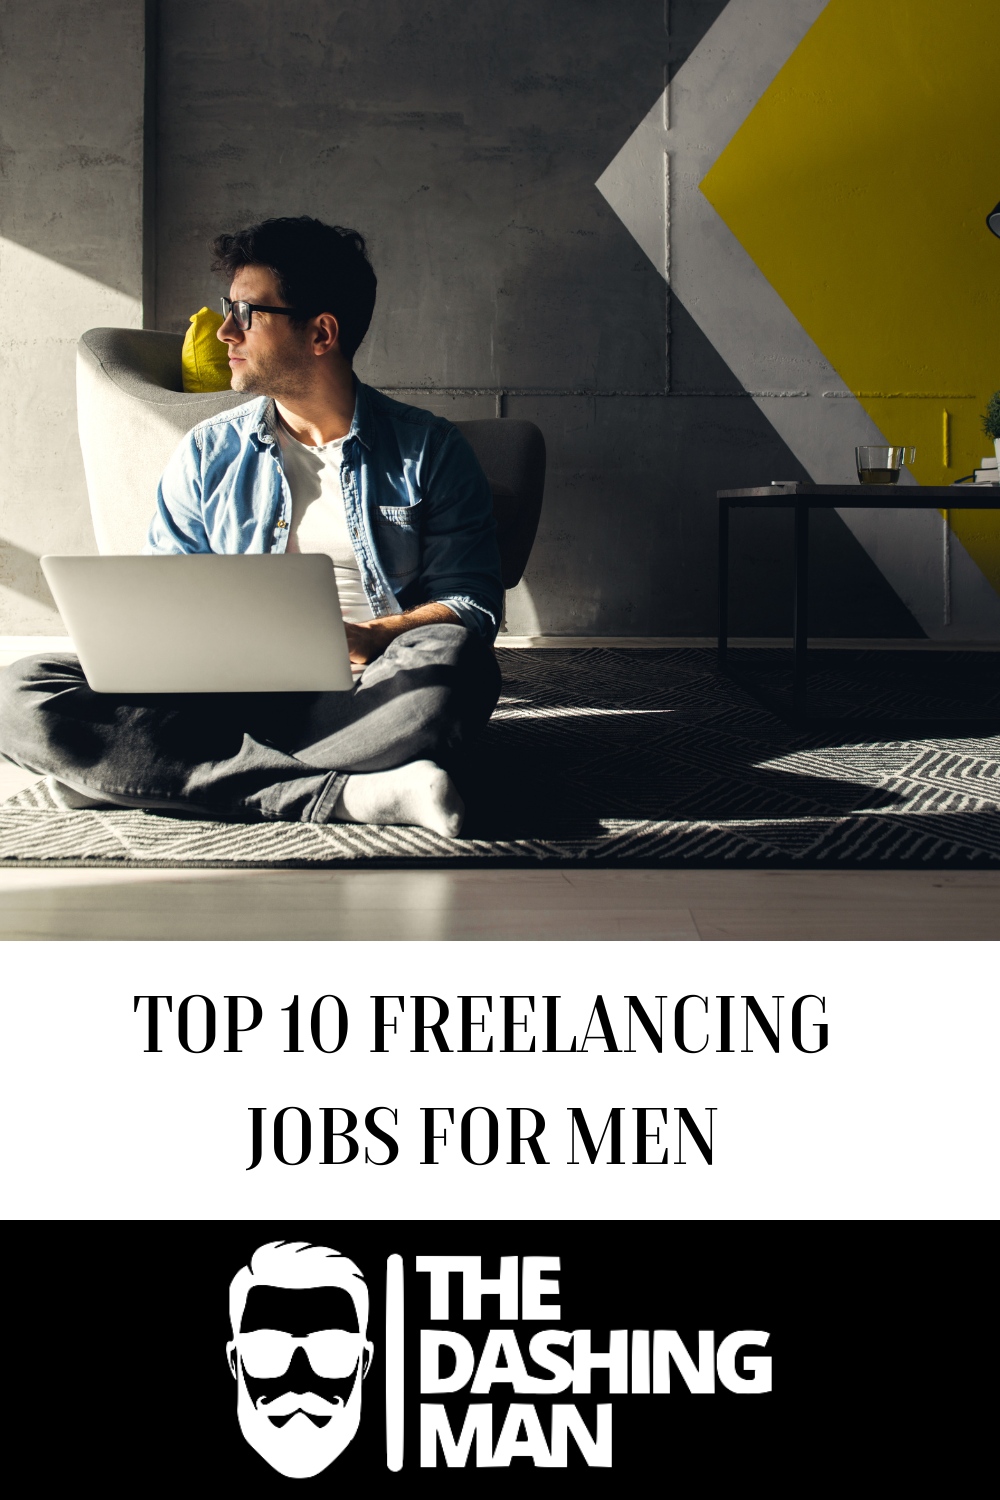 Top 10 Freelancing Jobs for Men